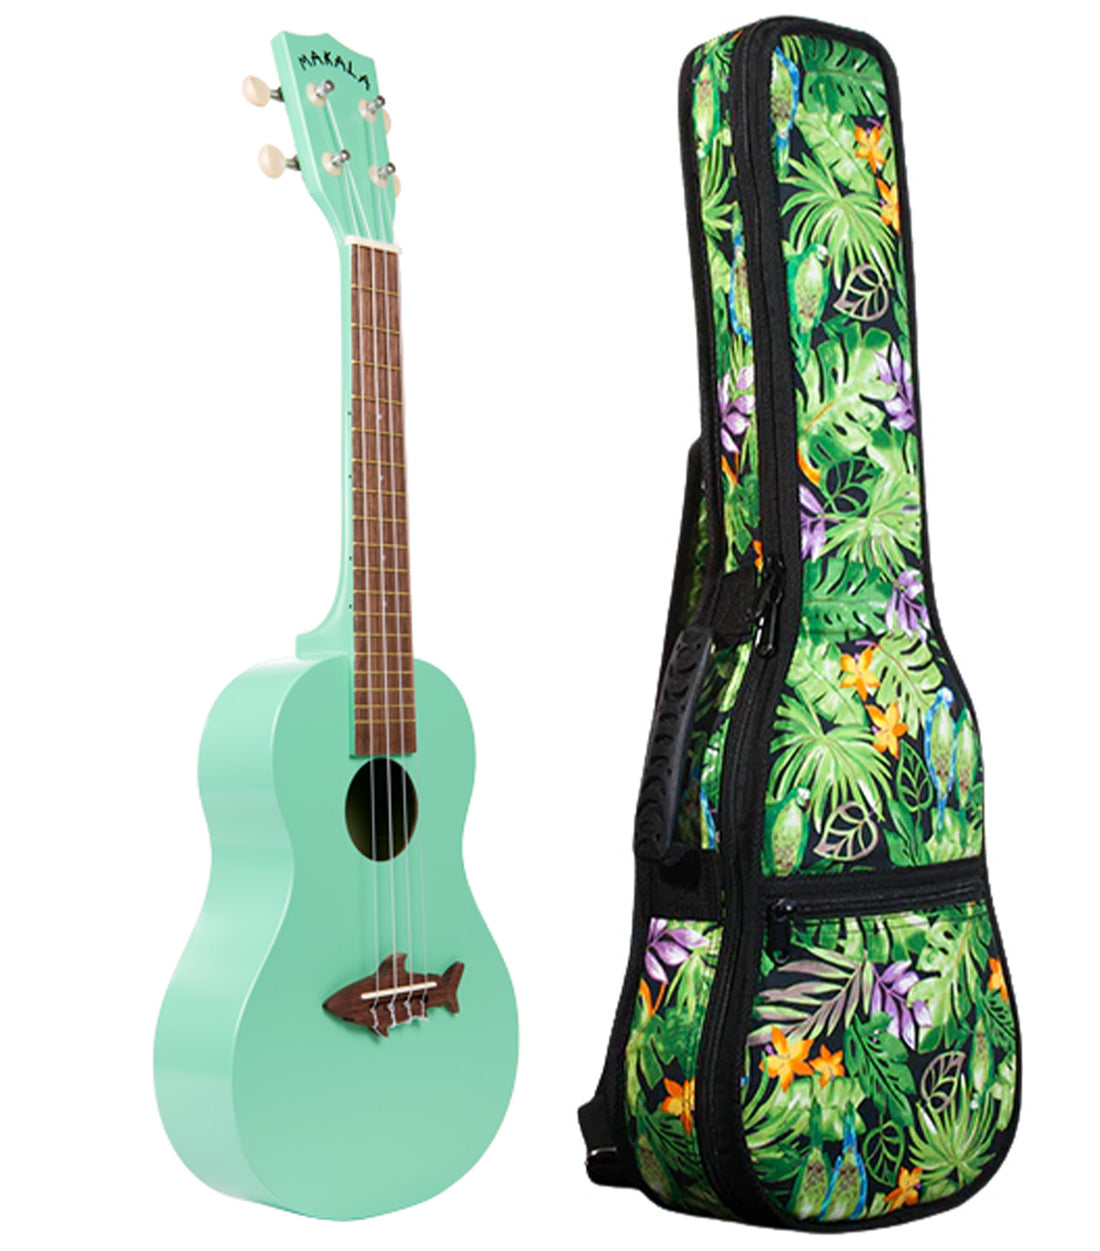 MK-SS/GRN Green Soprano Shark Ukulele Includes Gigbag Floral Print, Padded with Backpack Straps